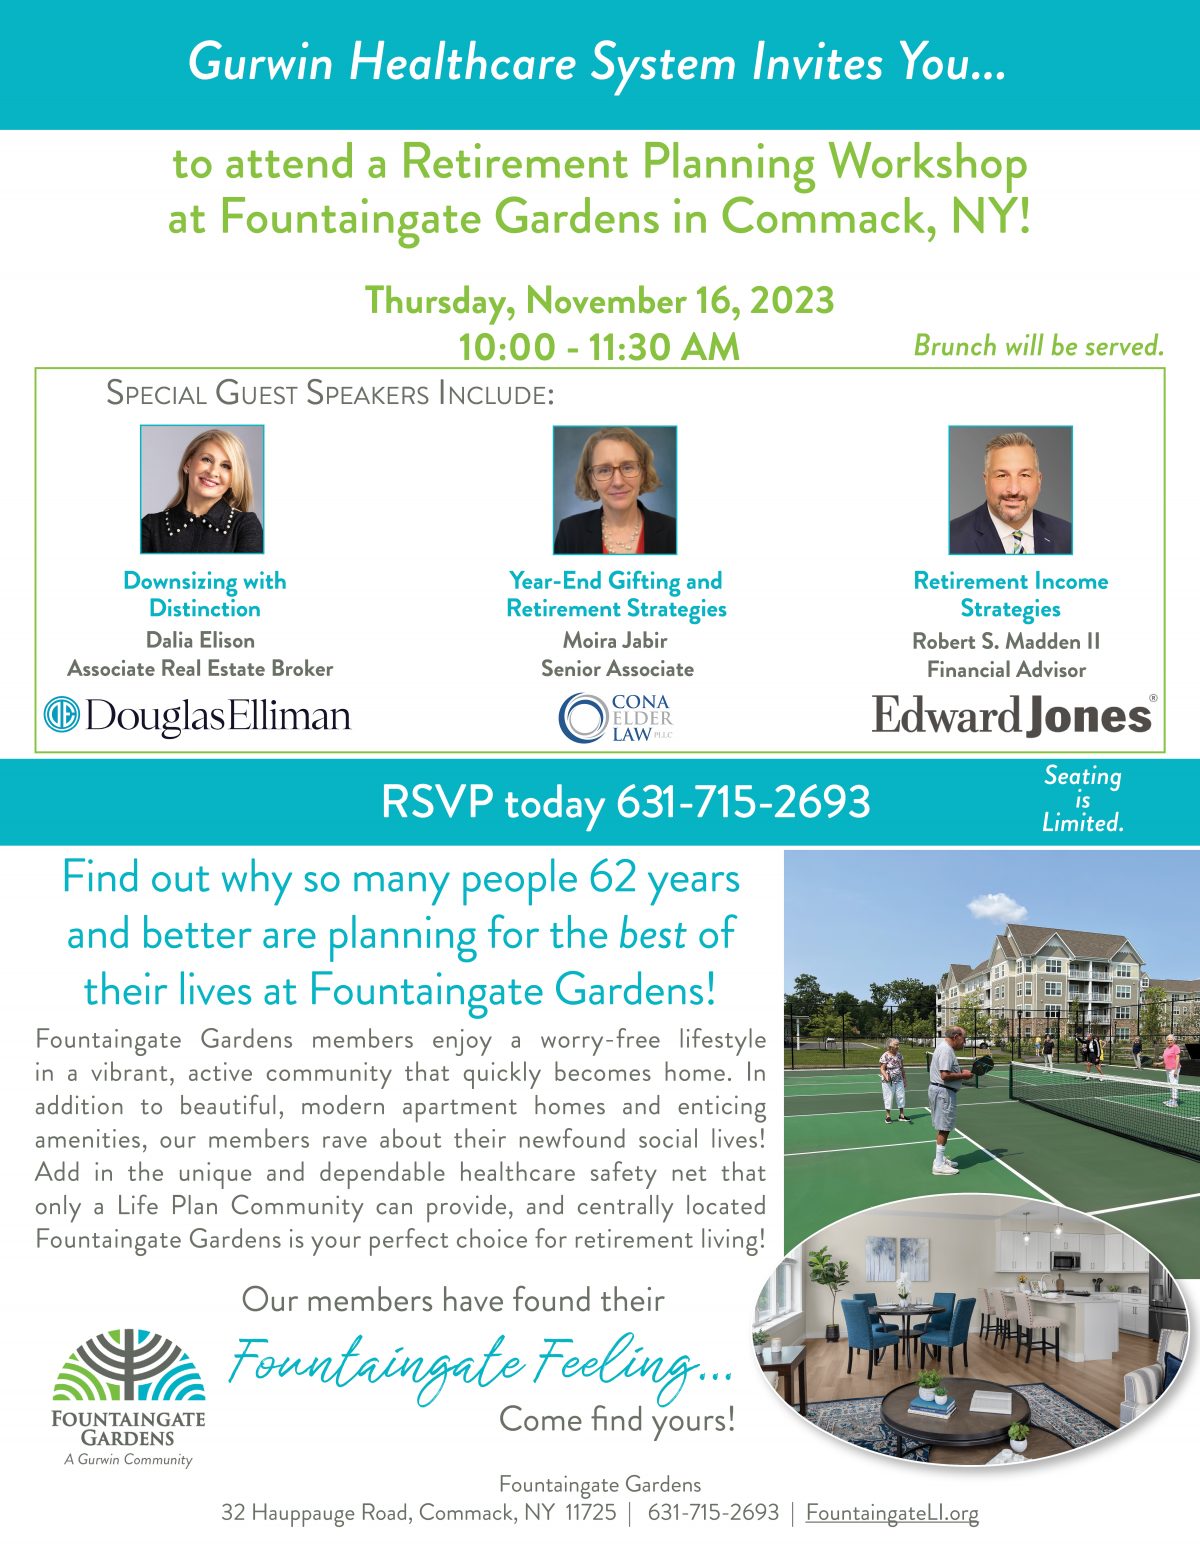 Fountaingate Gardens presents a Retirement Planning Workshop 11/16/23